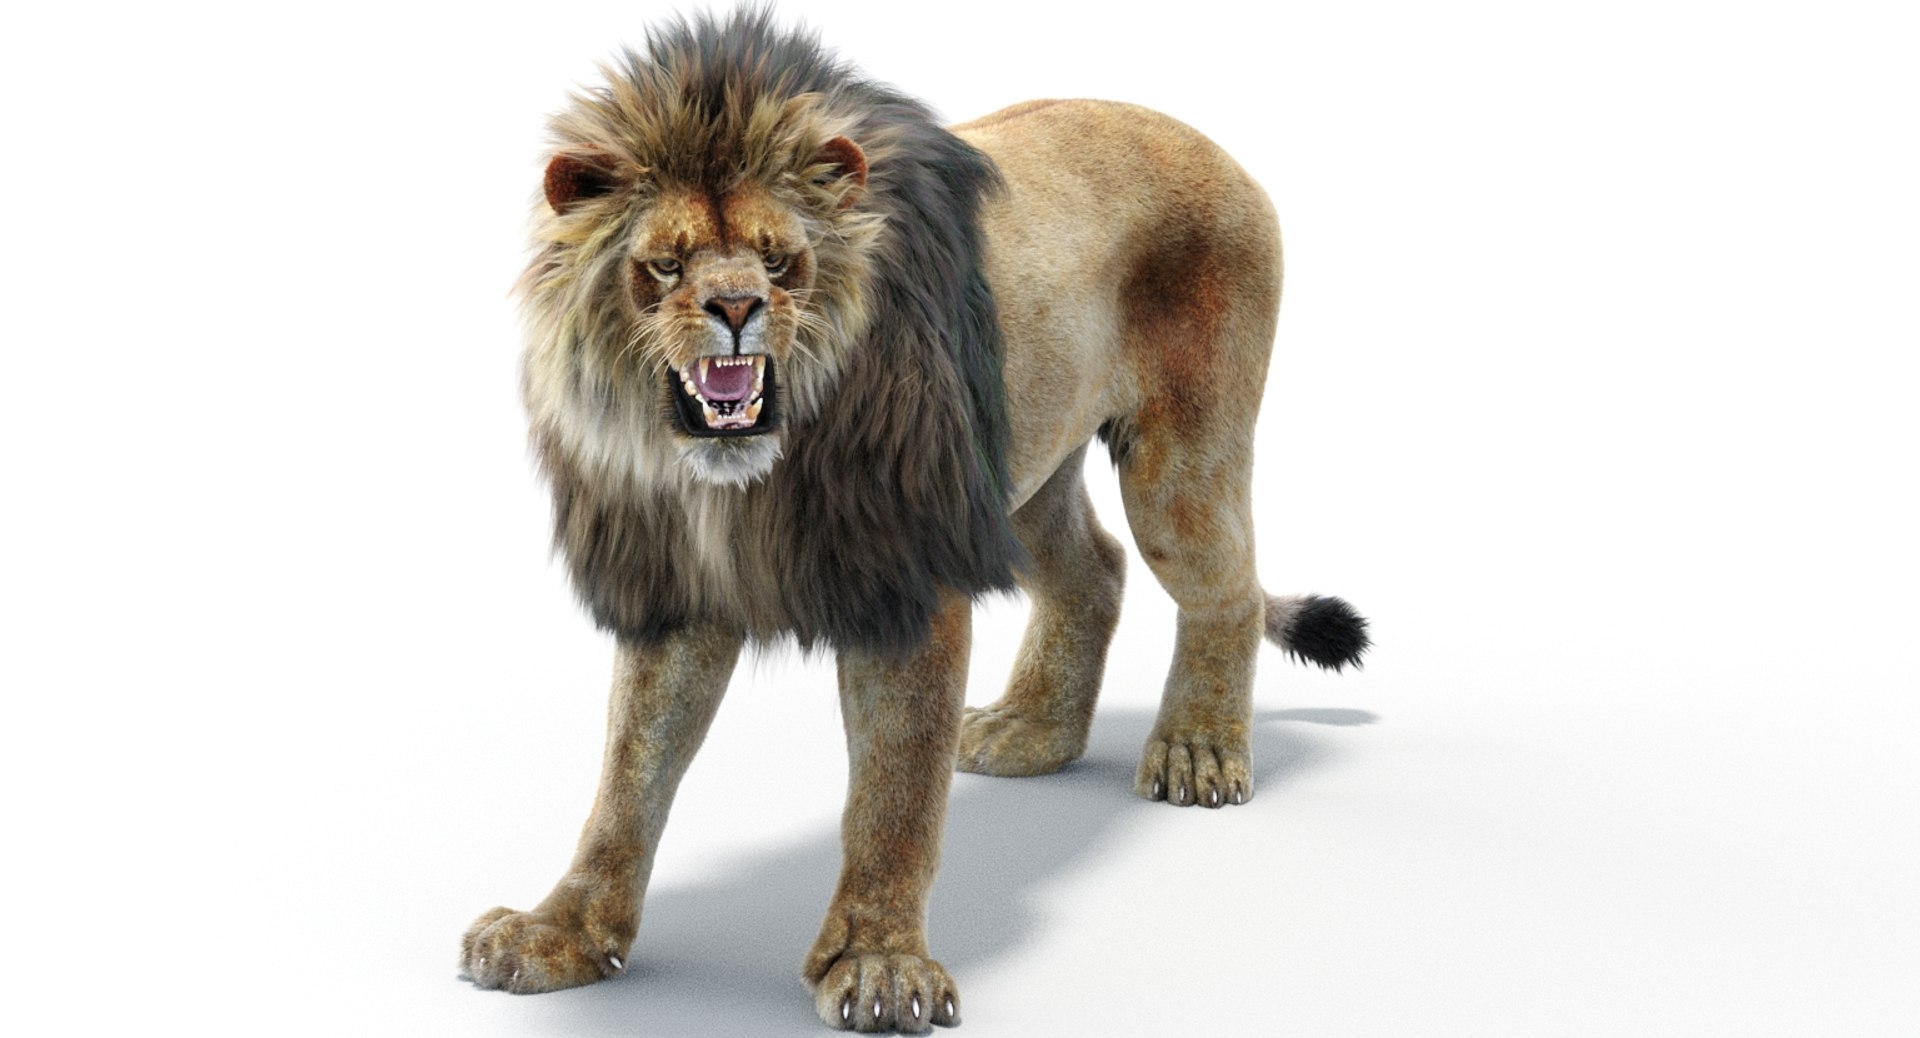 Lion 2 fur colors model - TurboSquid 1156859